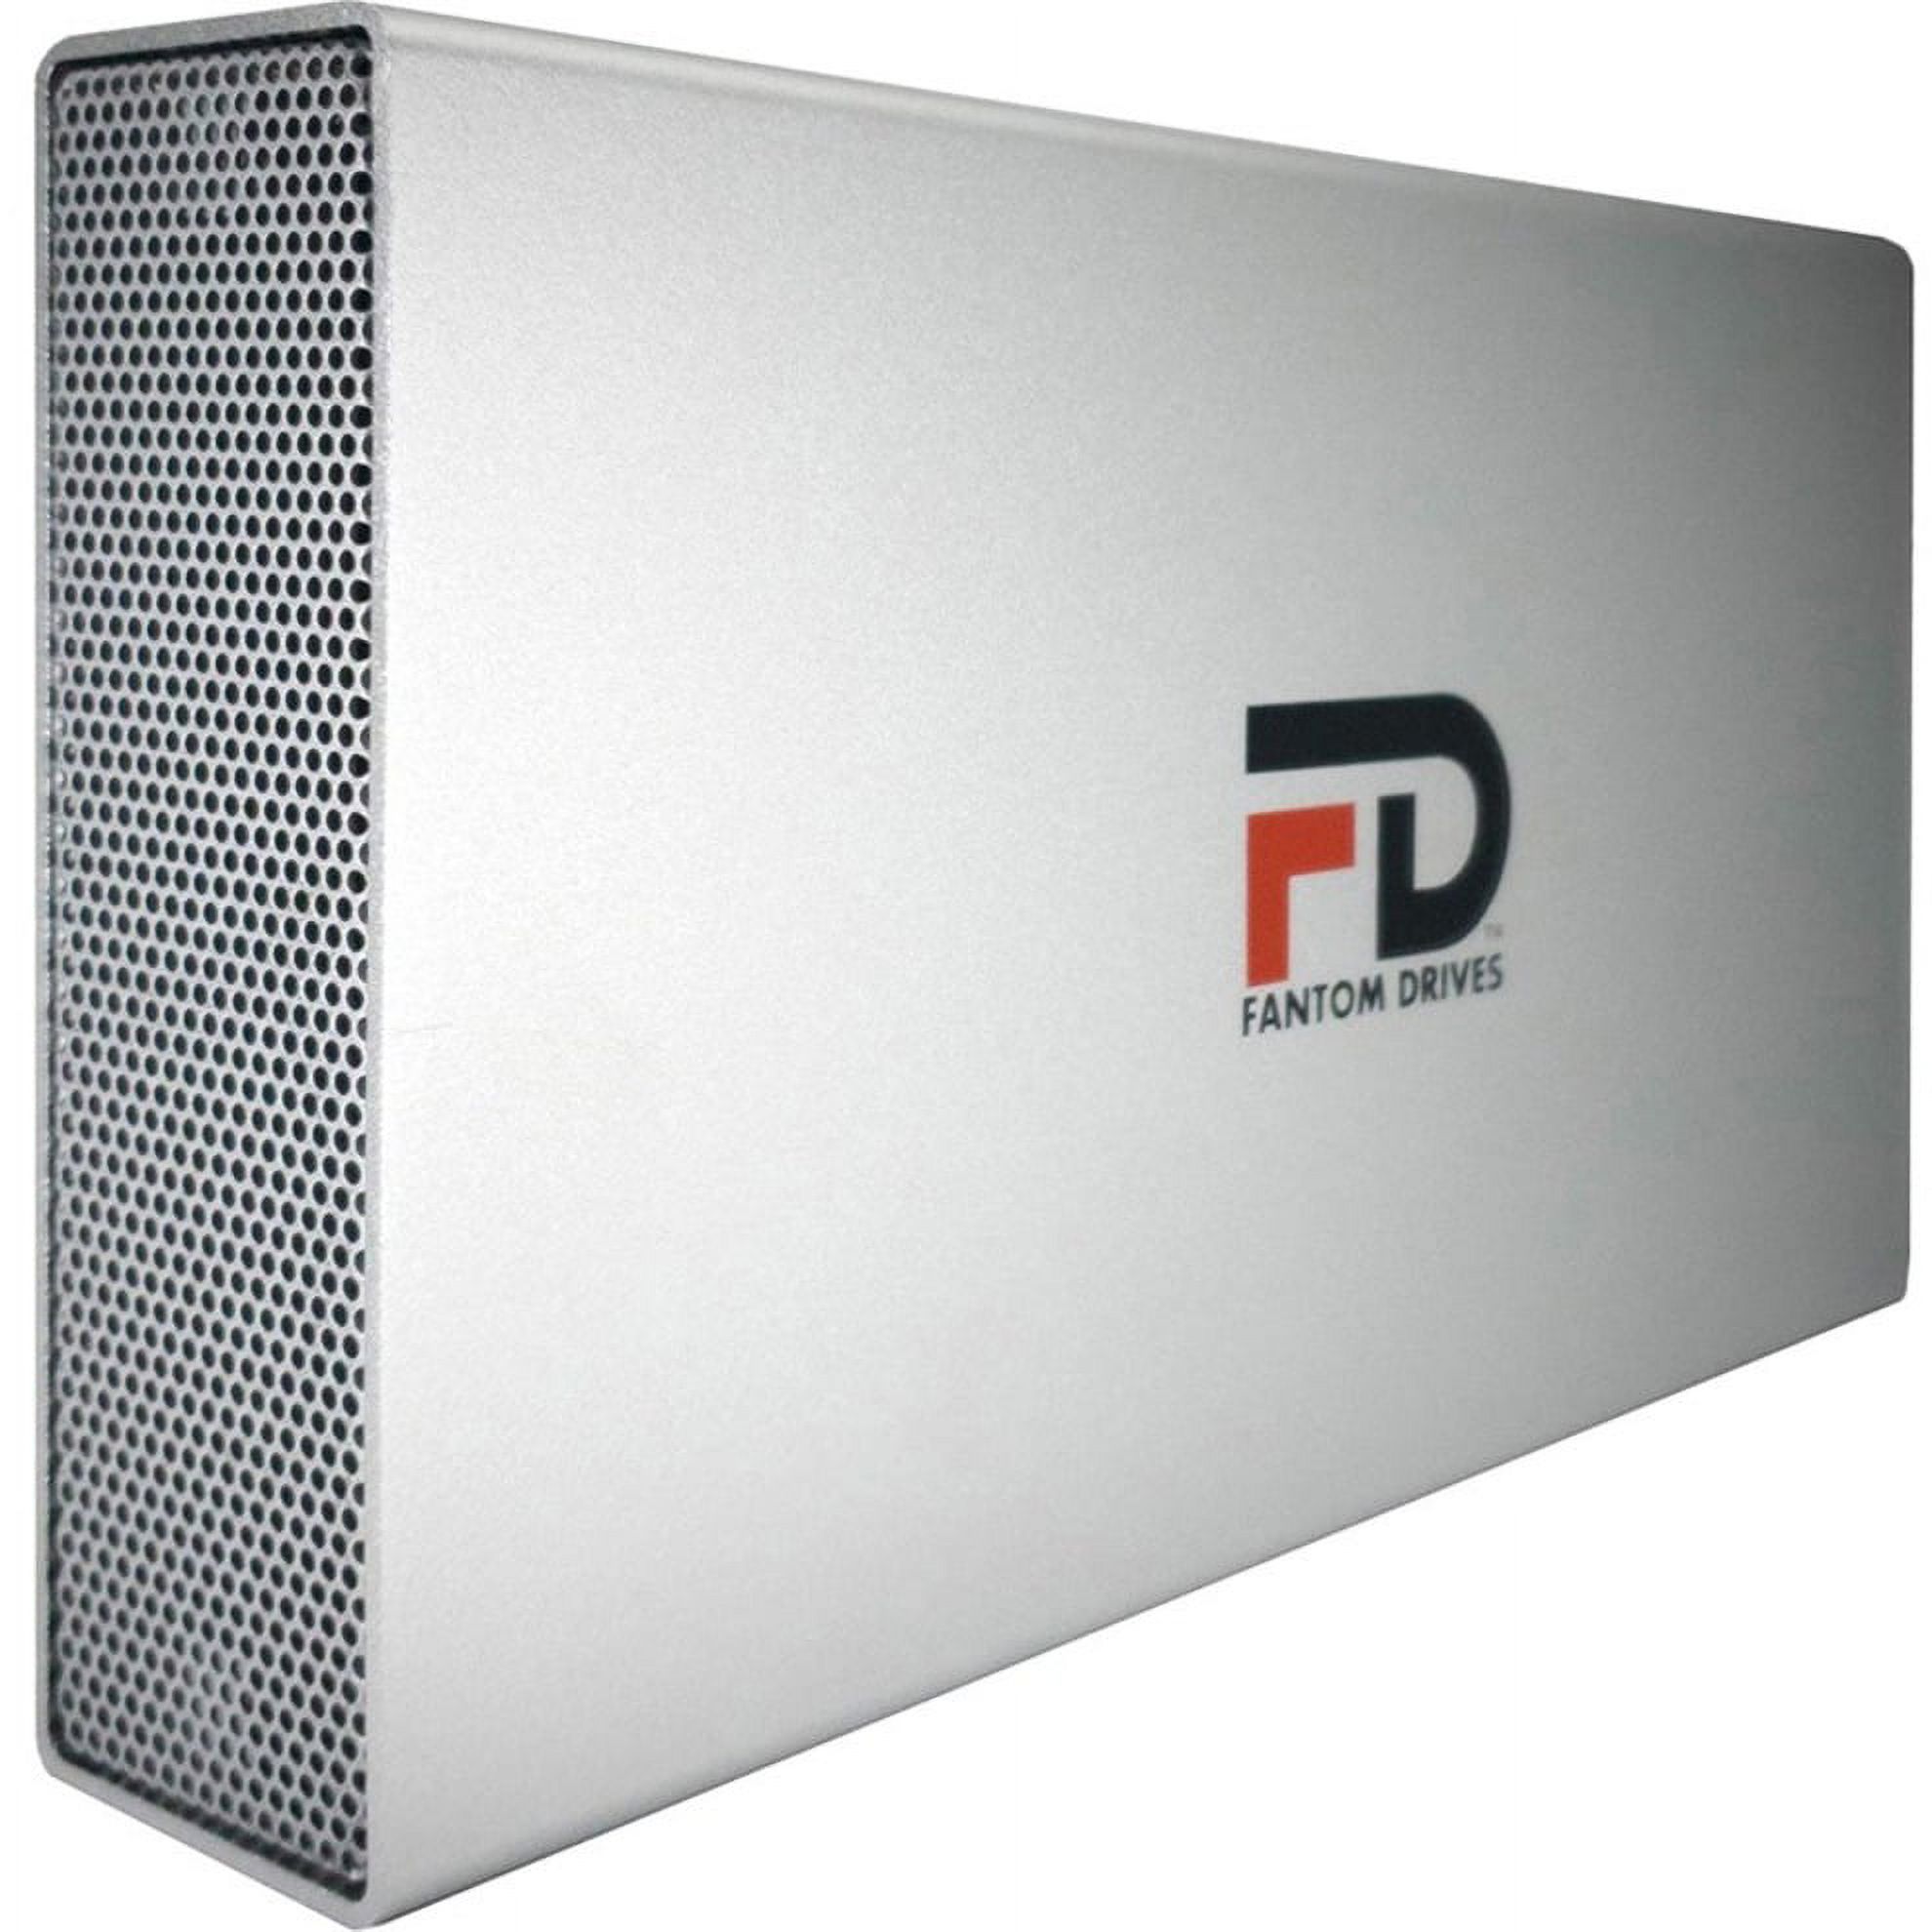 Fantom Drives 14TB External Hard Drive, GFORCE 3, USB 3, Aluminum, Silver, GF3S14000U - image 4 of 4